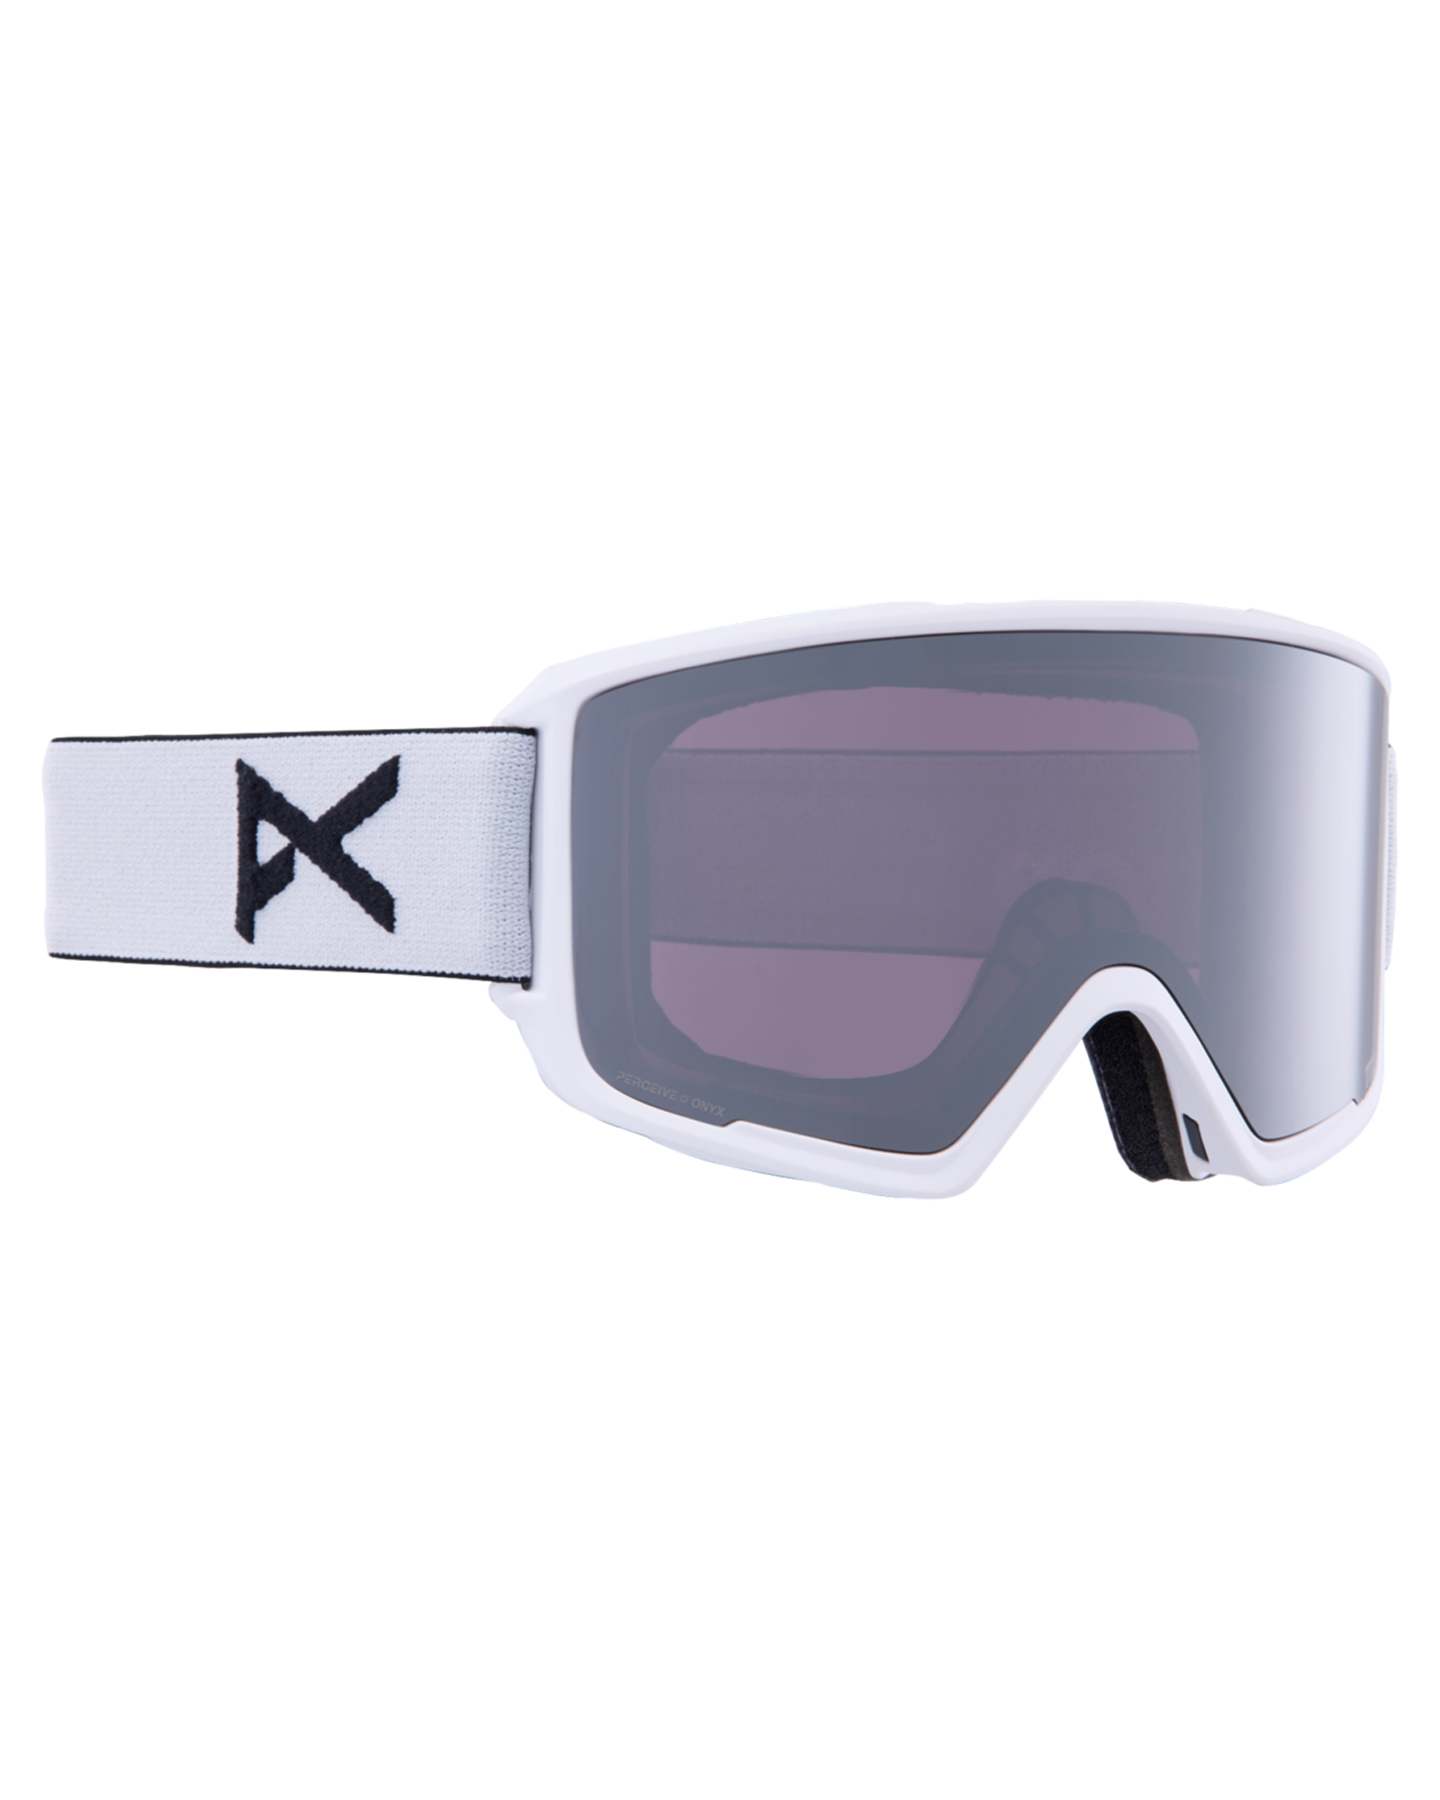 Anon M3 Low Bridge Fit Snow Goggles + Bonus Lens + MFI - White / Perceive Sunny Onyx Men's Snow Goggles - SnowSkiersWarehouse